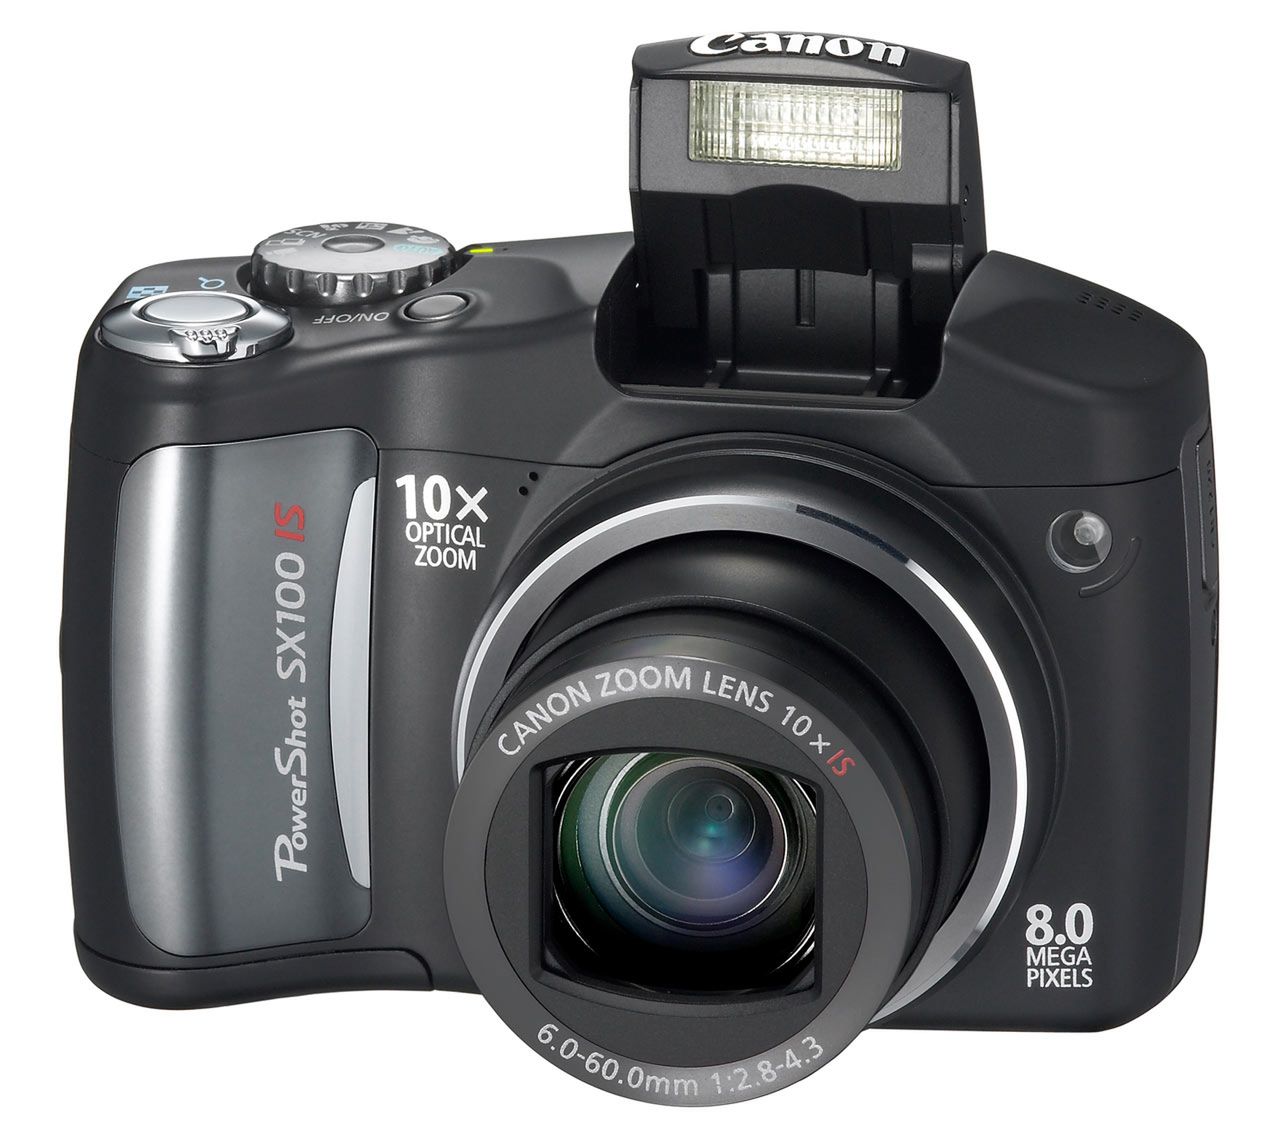 Canon PowerShot SX100 IS